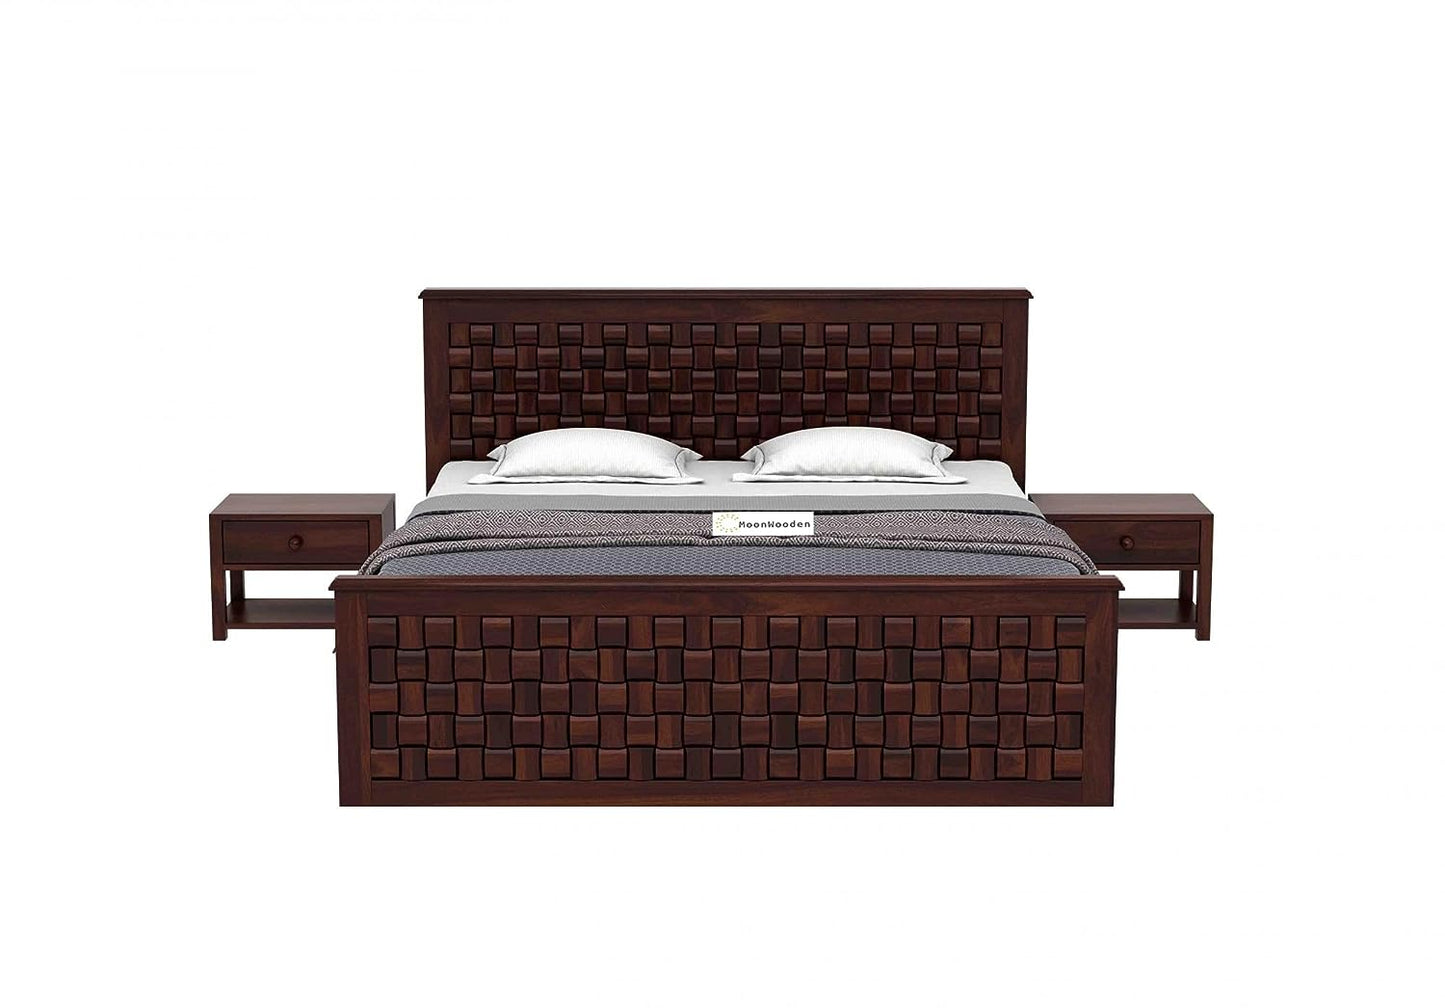 MoonWooden Sheesham Wood Bed Without Storage Wooden Double Bed Cot Bed Furniture for Bedroom Living Room Home|Nivaar Degine with Dark Honney (Model-2, King)